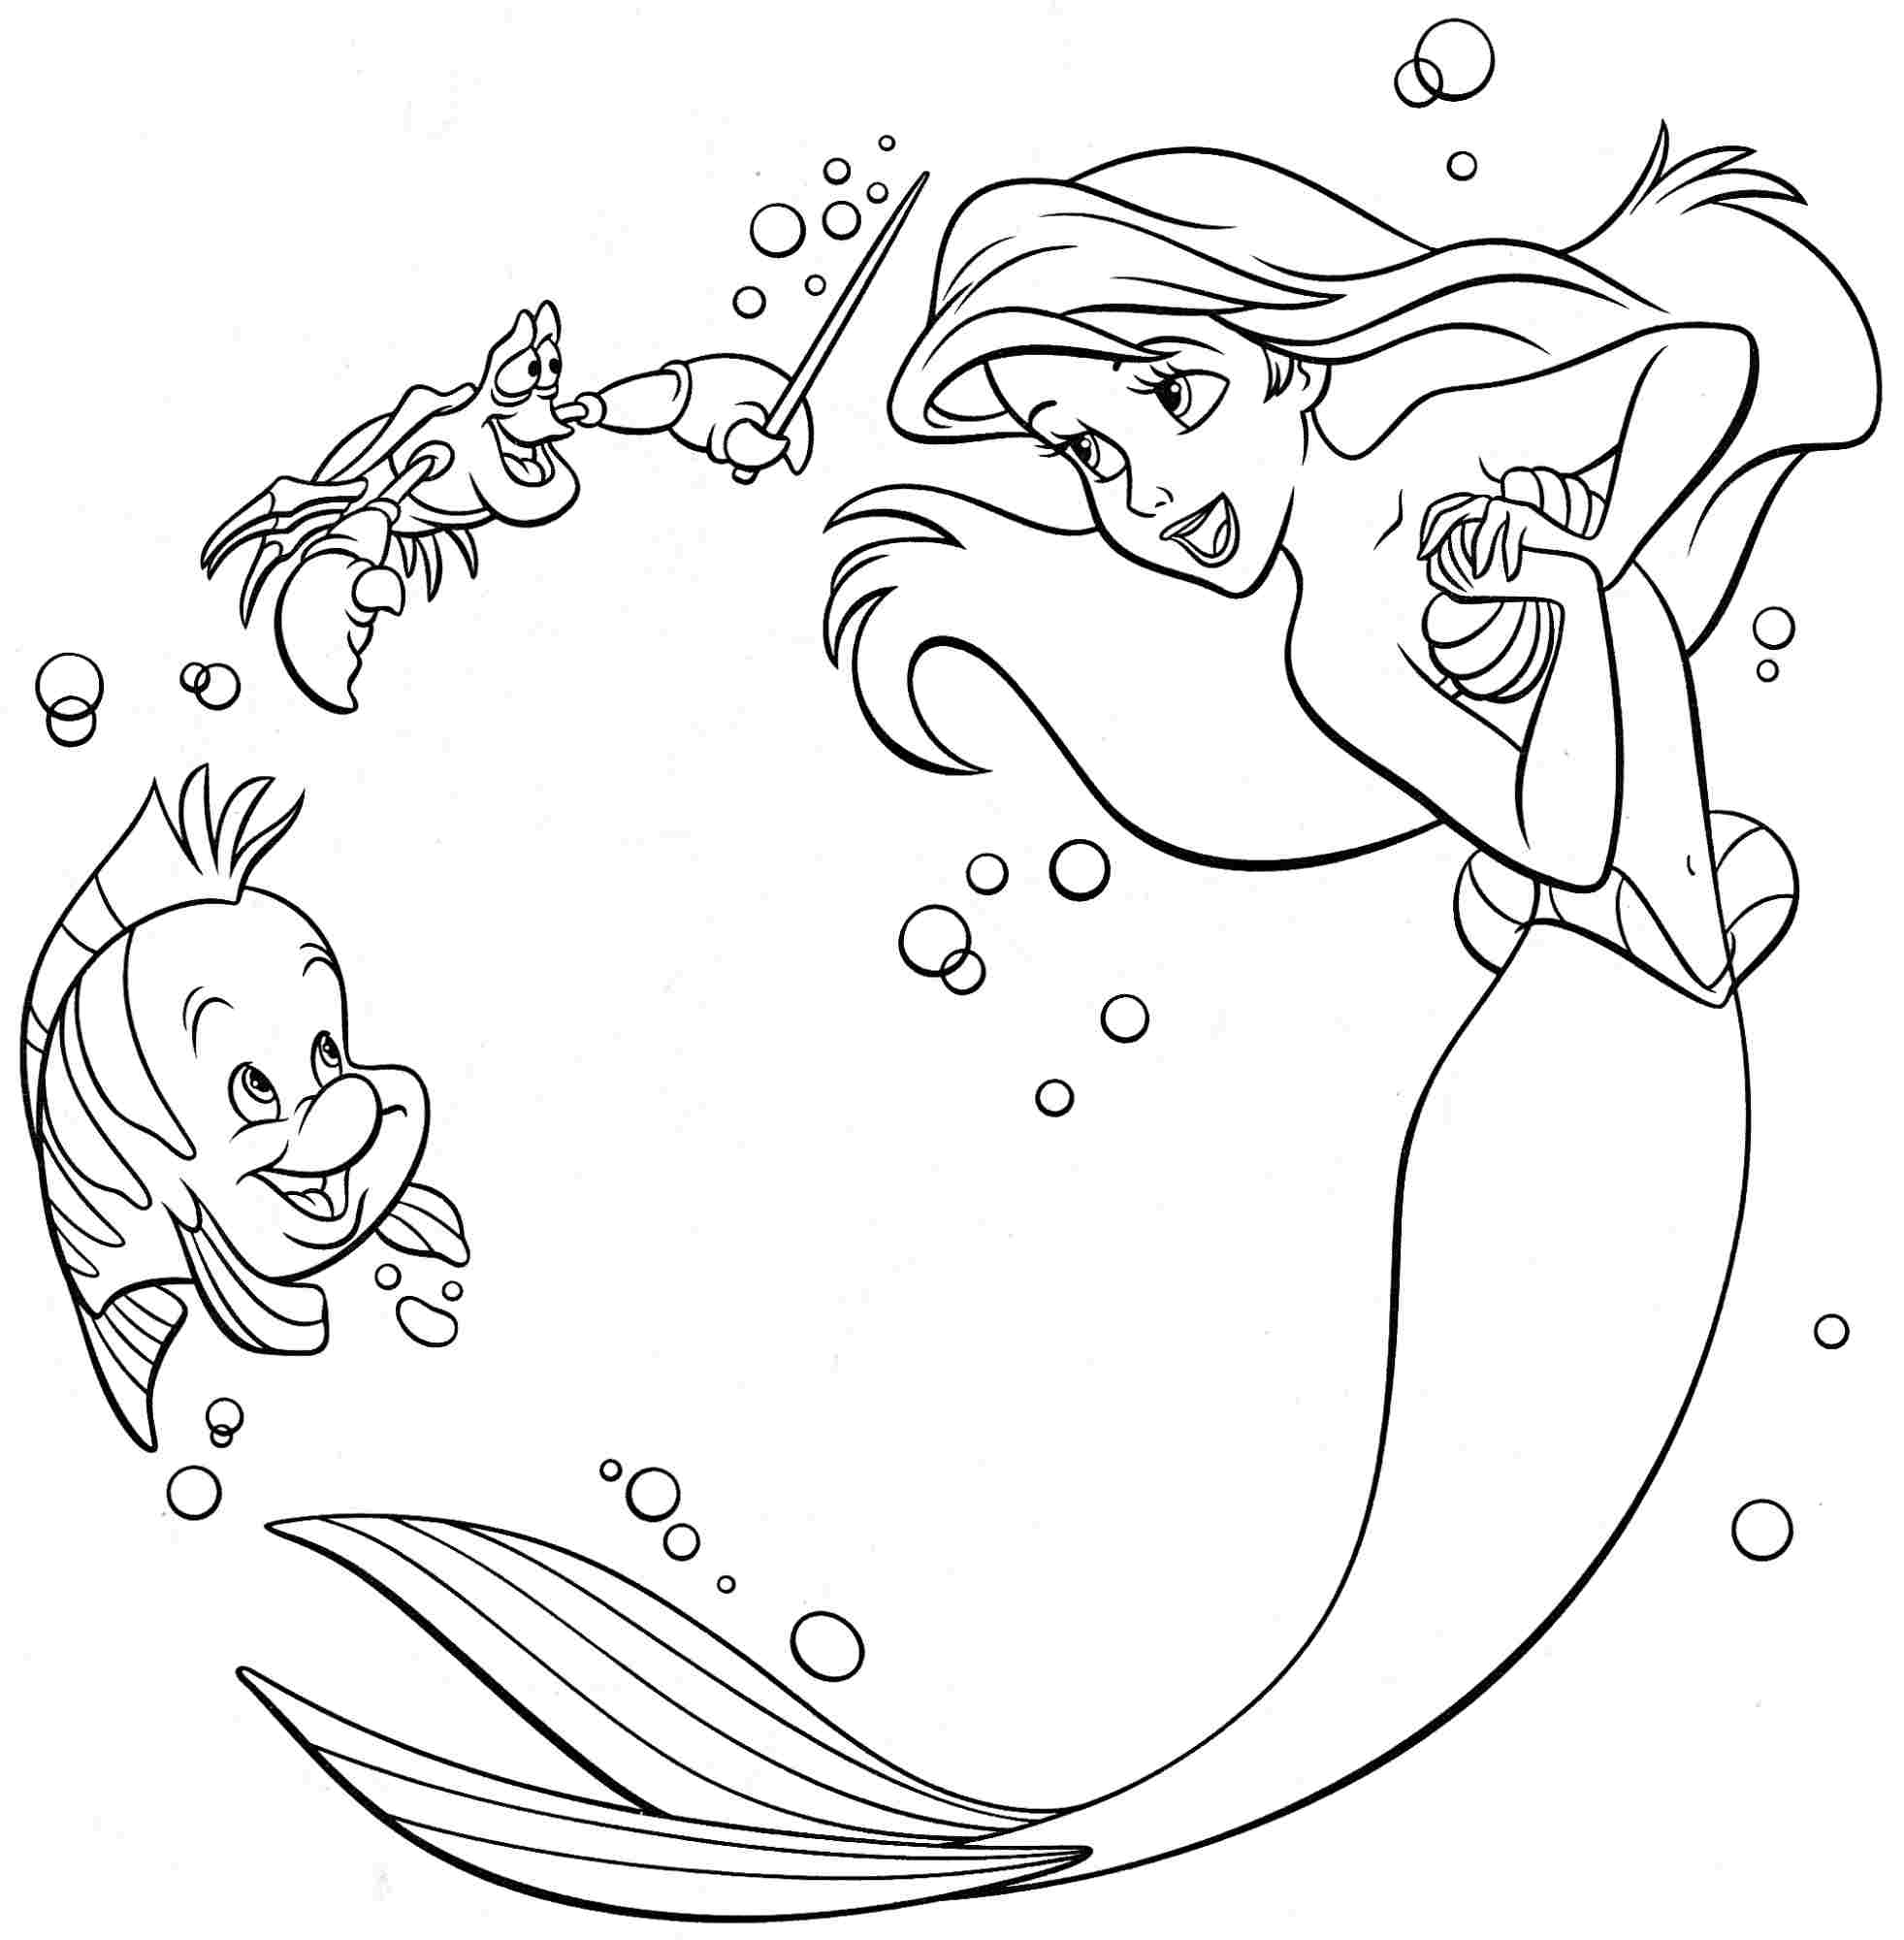 Coloring Pages Disney Ariel At Getdrawings | Free Download